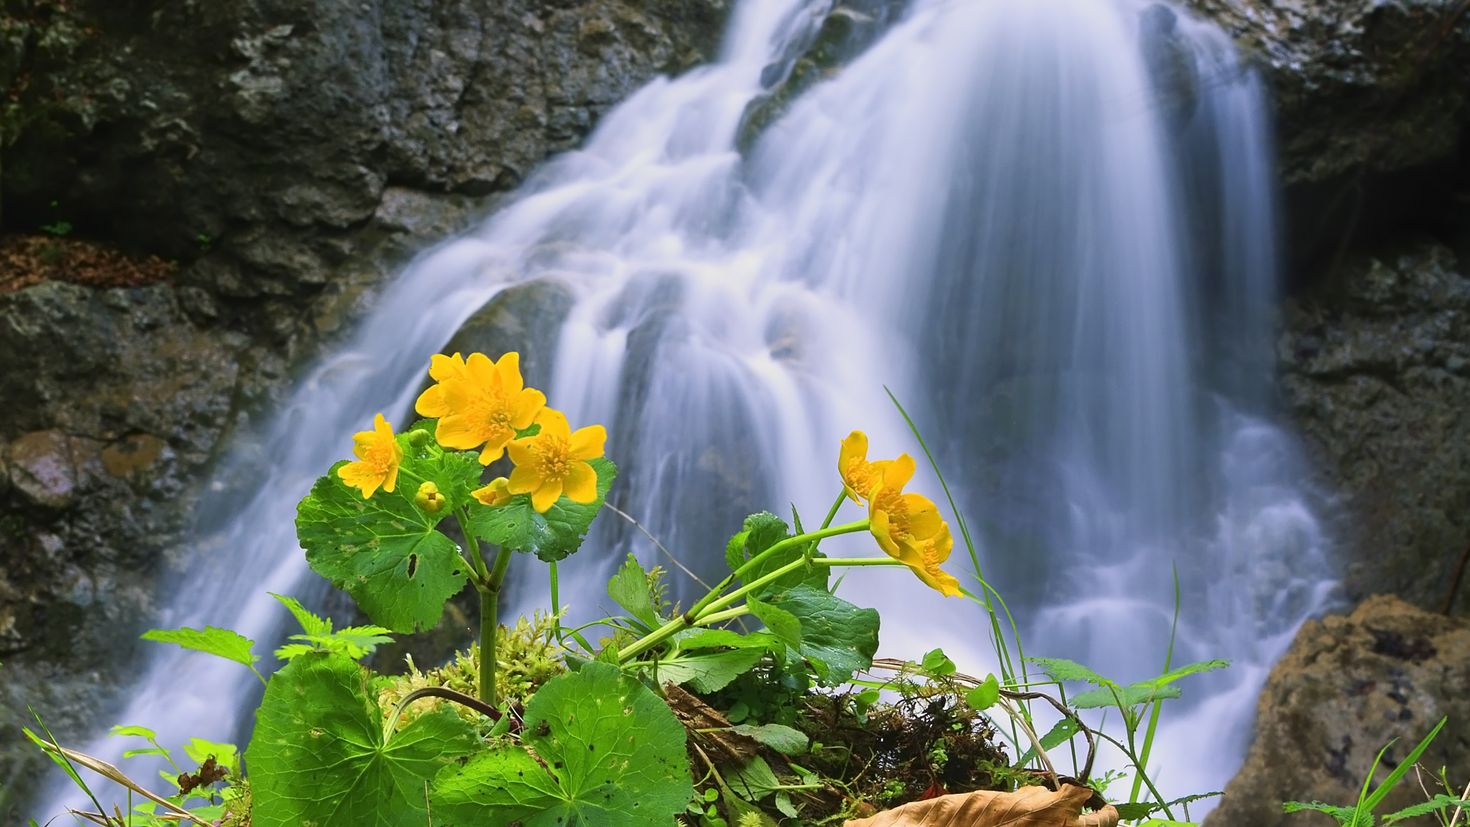 Видео на телефон природа. Красивые водопады. Живая природа. Вода в природе. Цветы на фоне водопада.